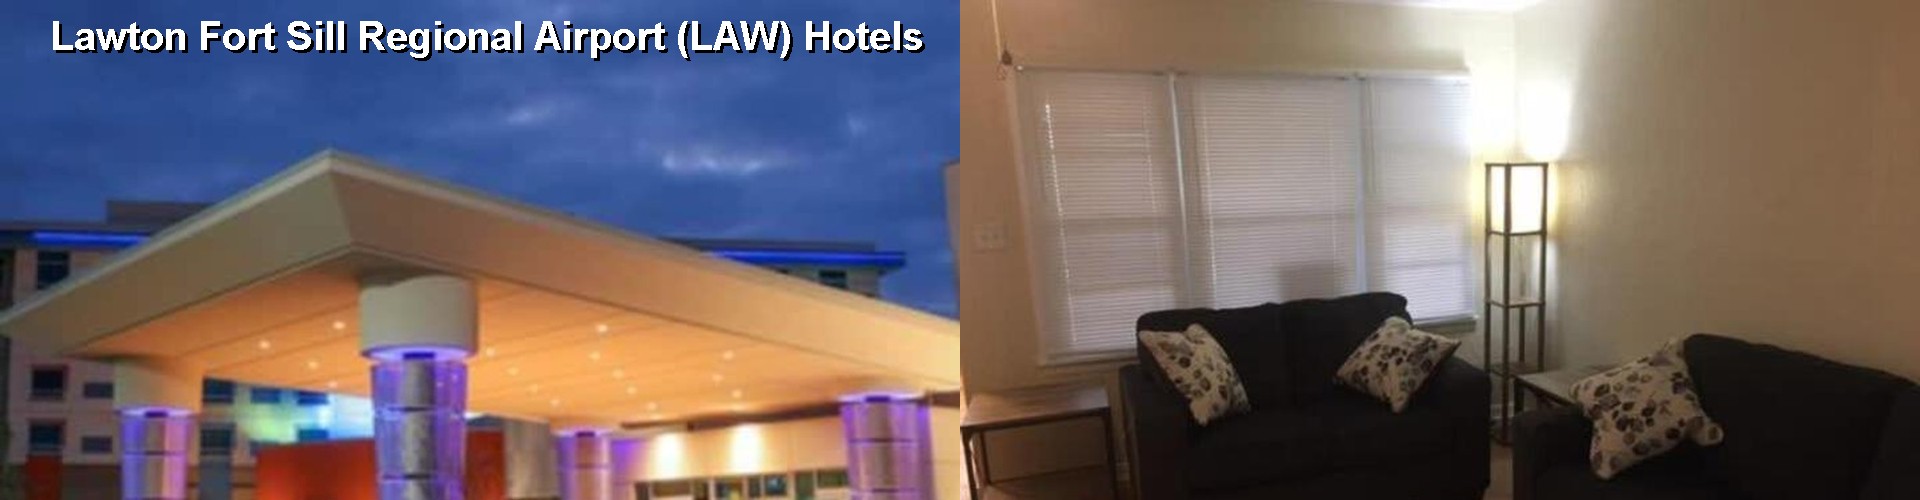 3 Best Hotels near Lawton Fort Sill Regional Airport (LAW)